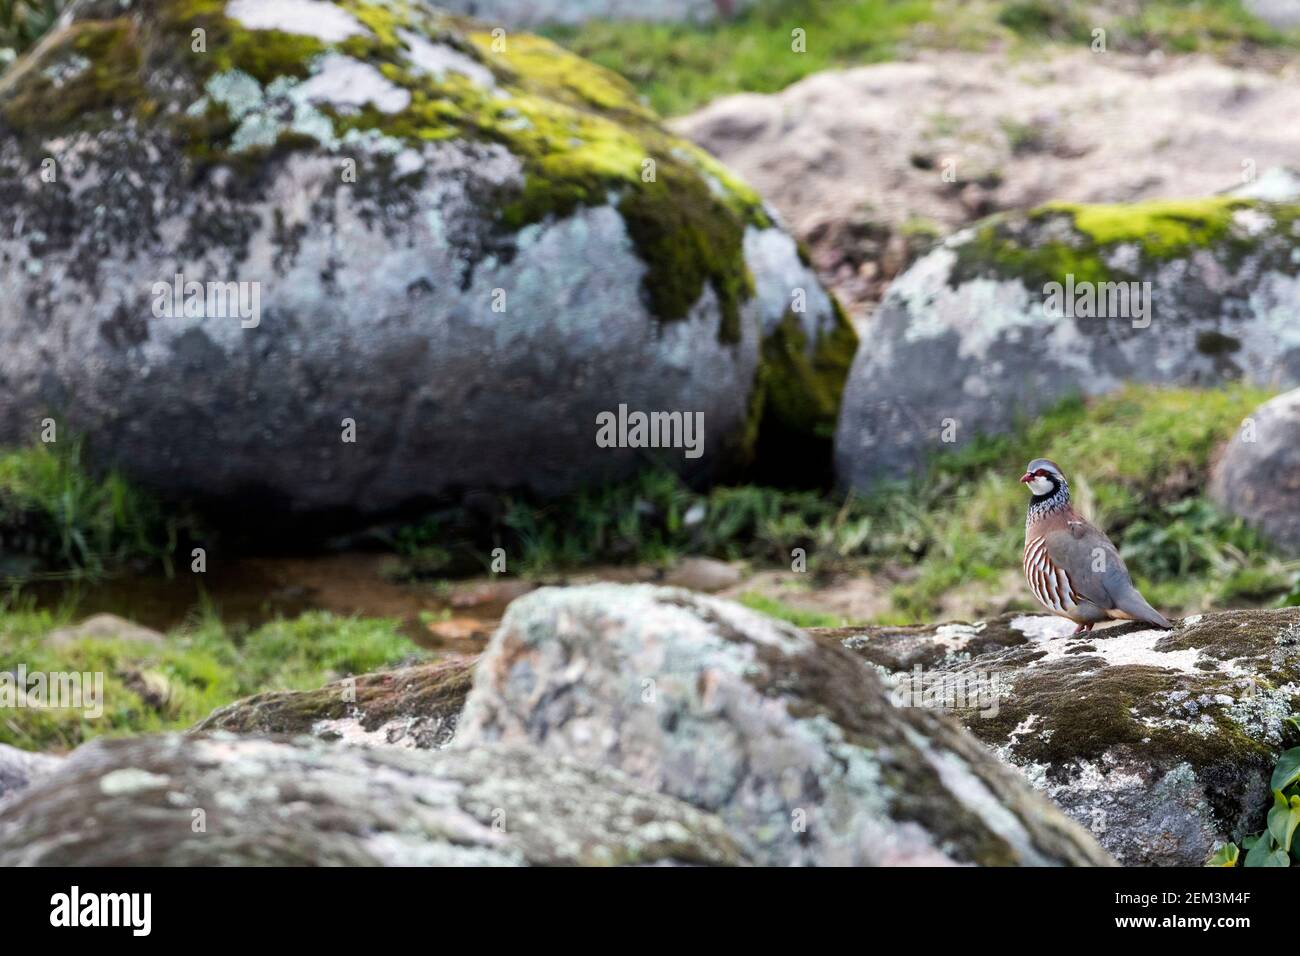 Spanish red-legged partridge (Alectoris rufa hispanica, Alectoris hispanica), in its habitat, Spain Stock Photo